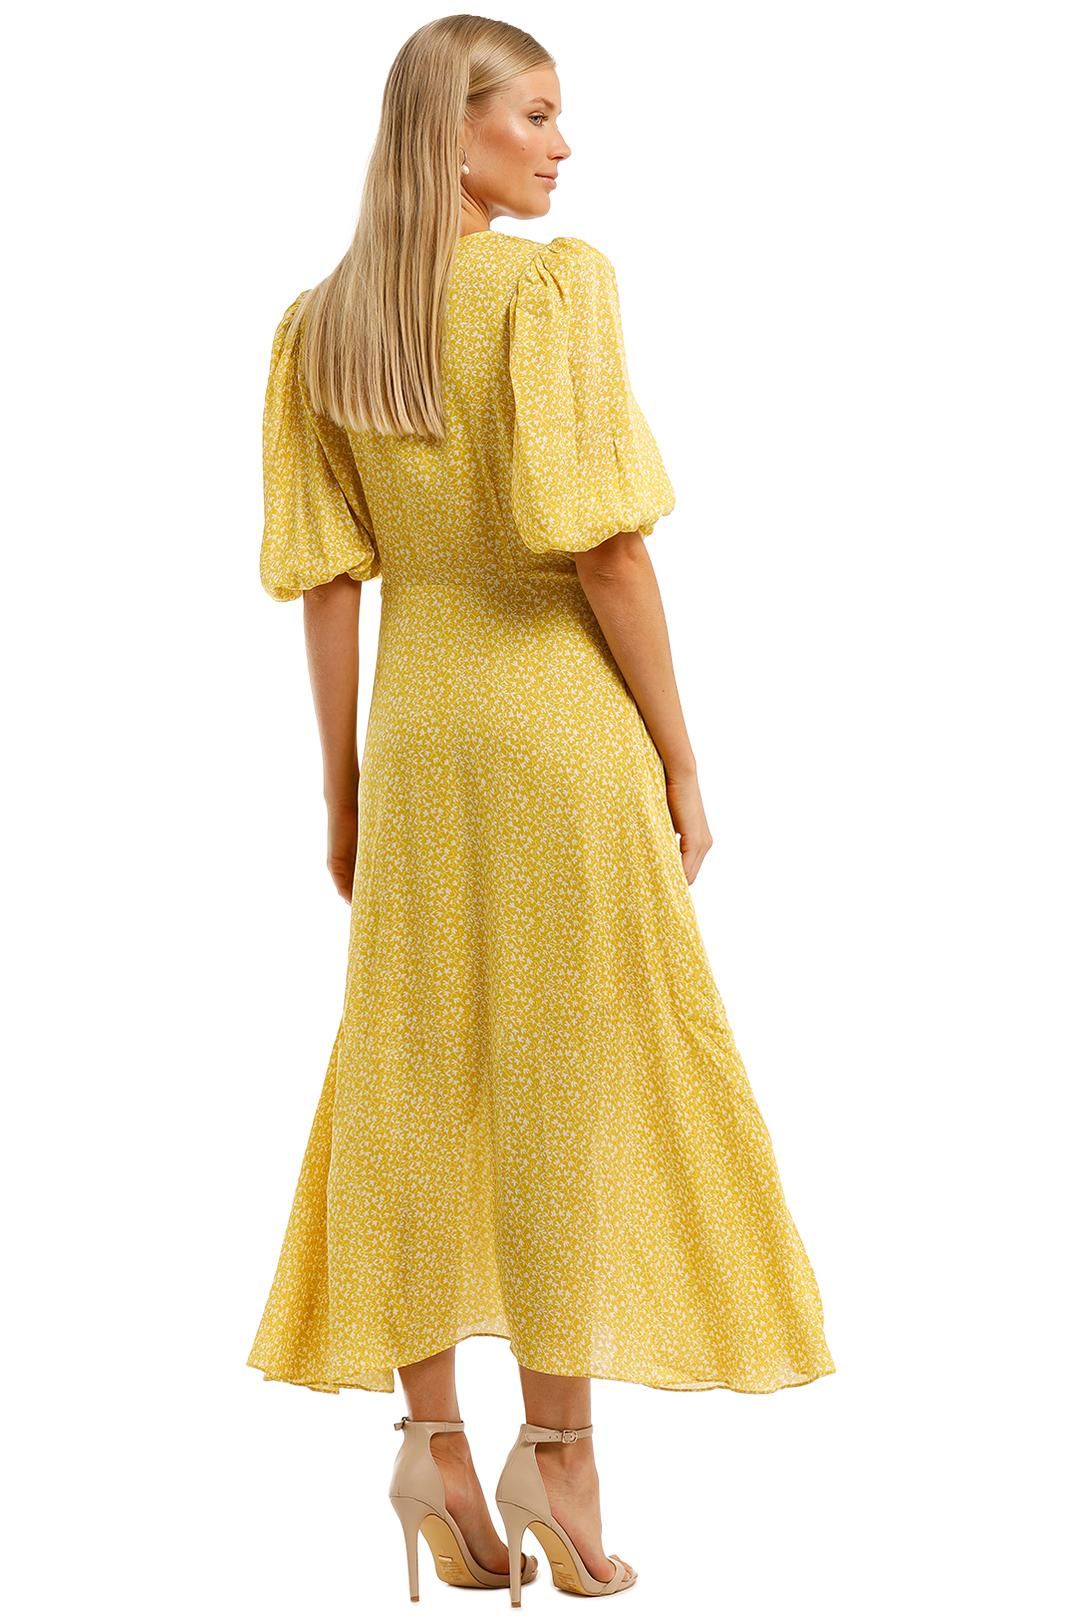 Nicholas Danielle Dress Yellow Maxi Length